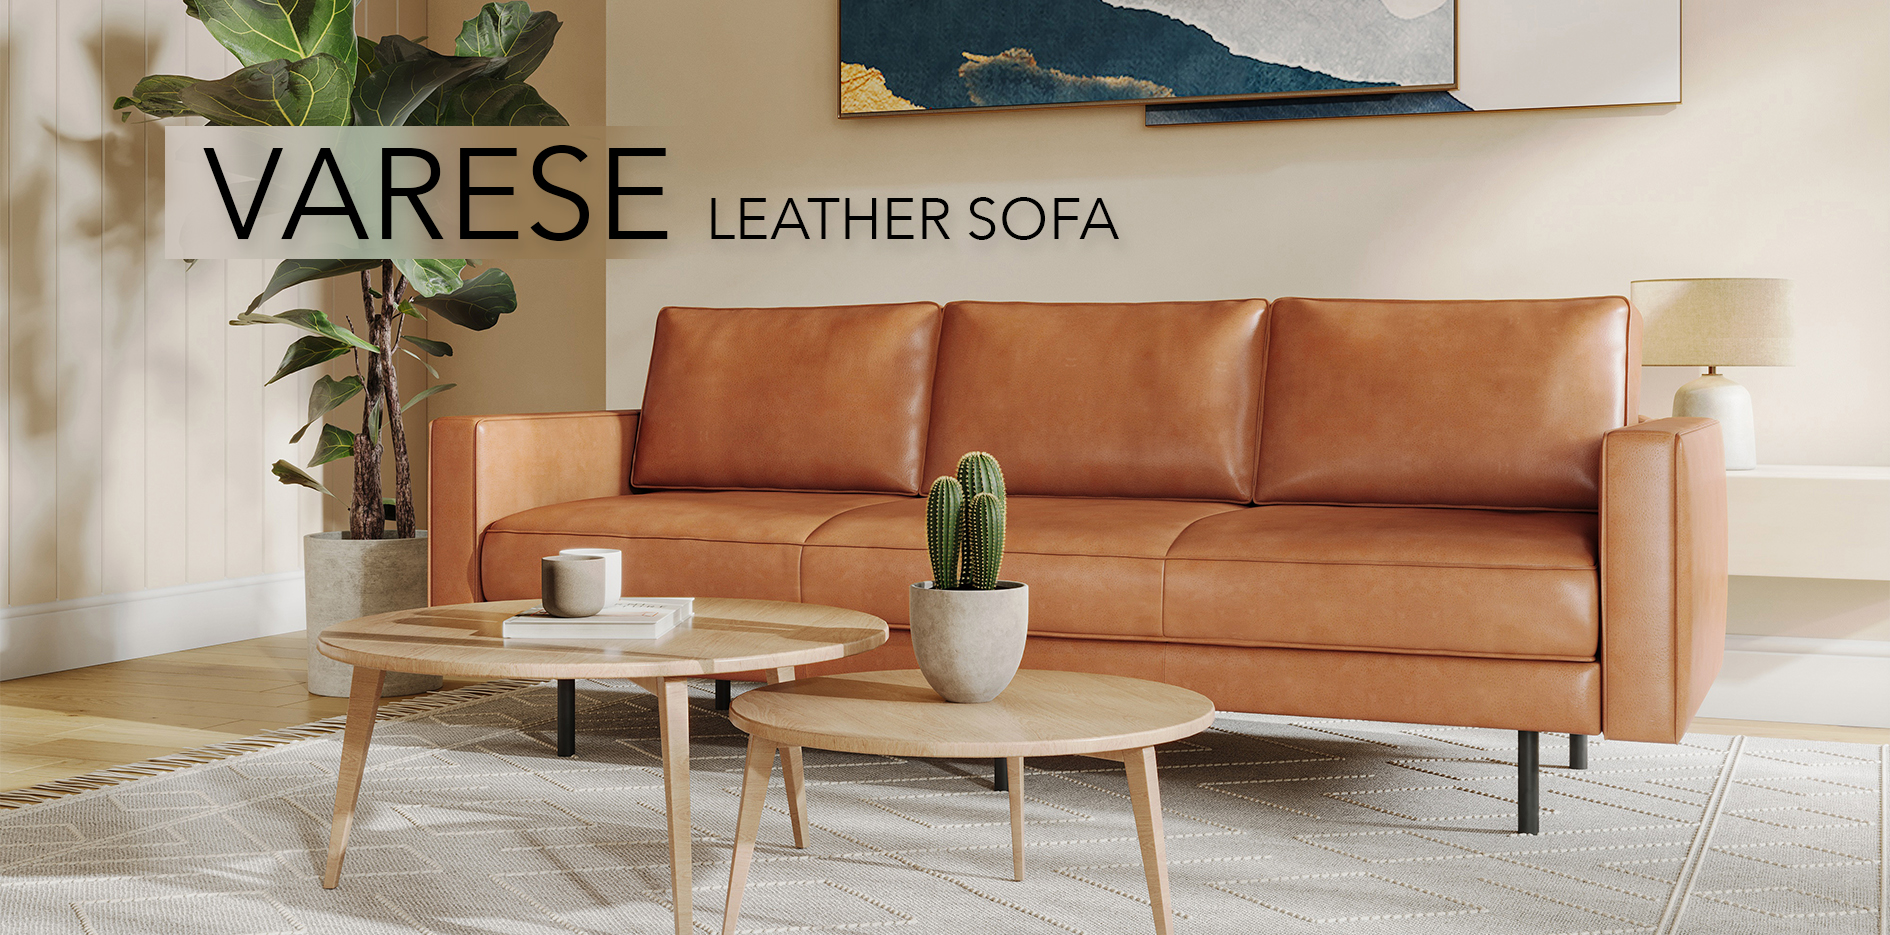 Varese Leather Sofa-mobile